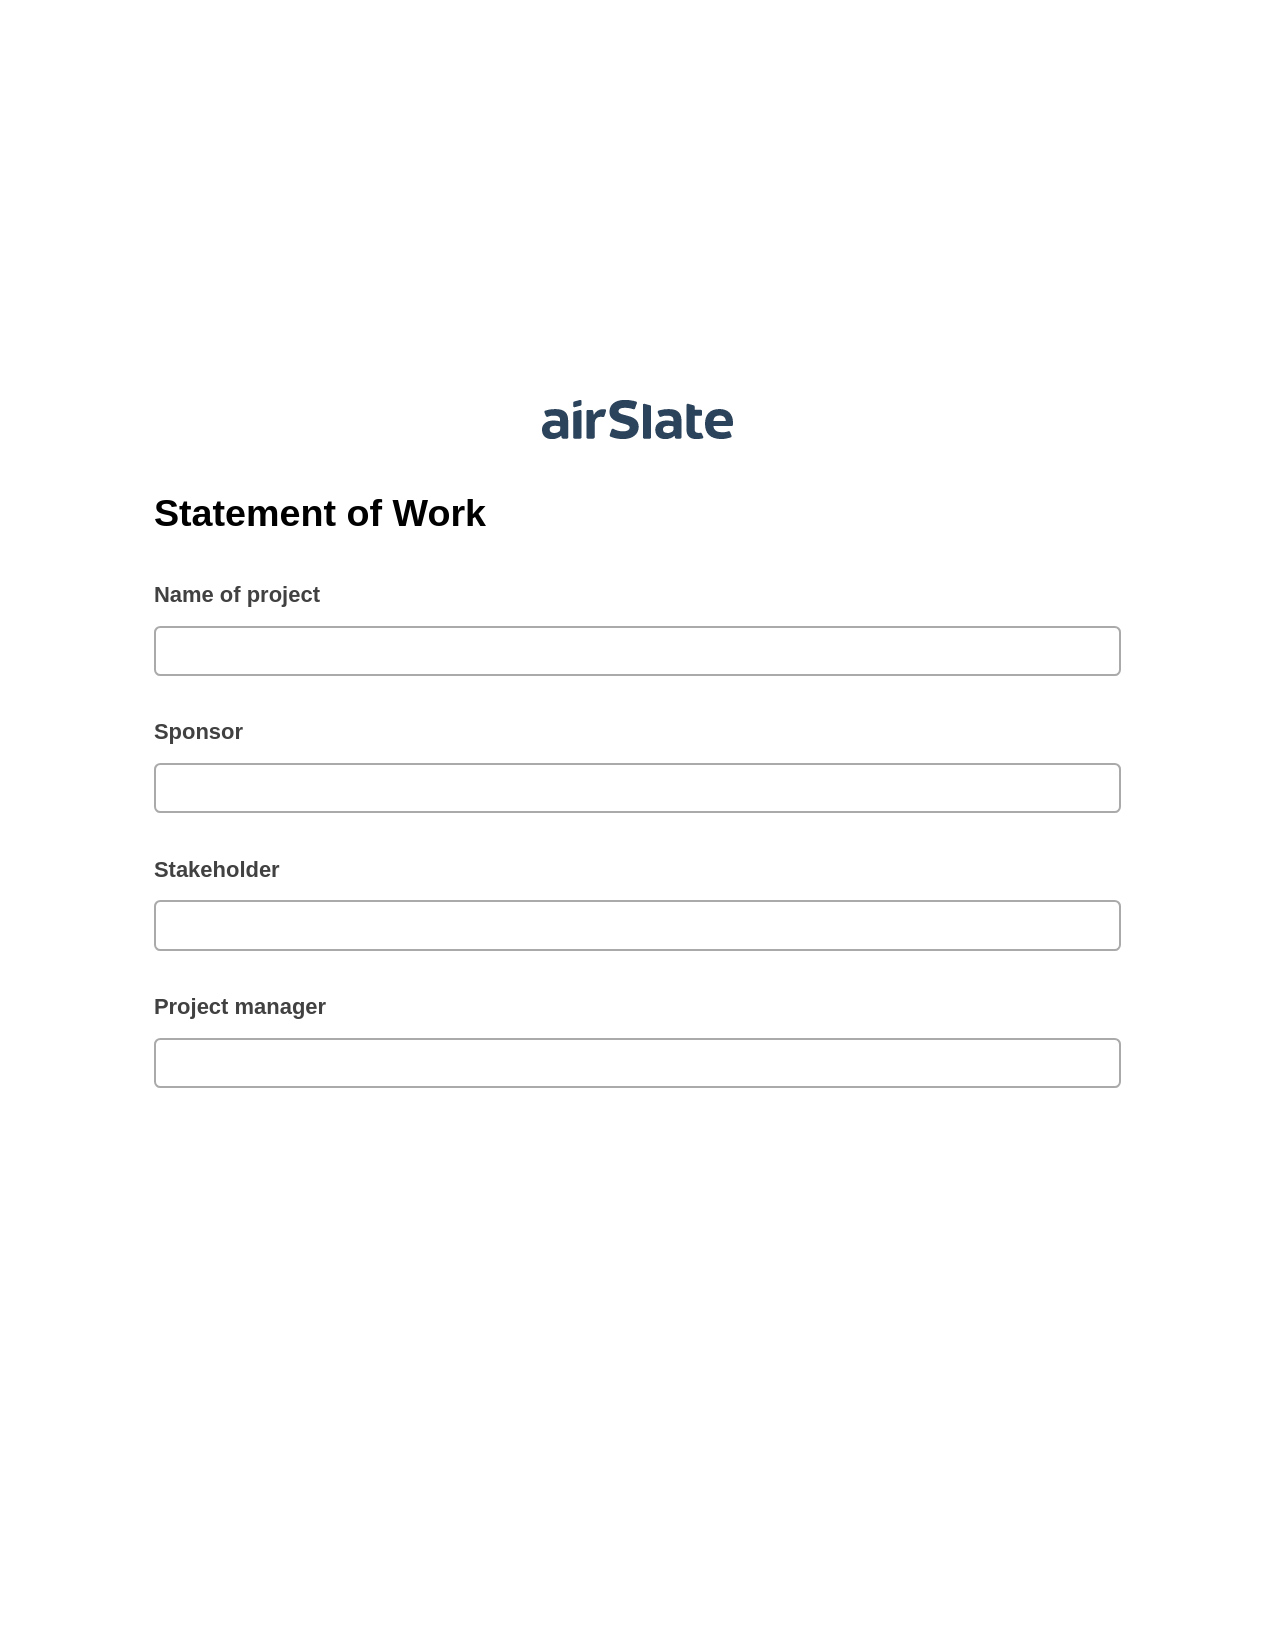 Multirole Statement of Work Pre-fill from CSV File Dropdown Options Bot, Create Slate every Google Sheet Update Bot, Google Drive Bot